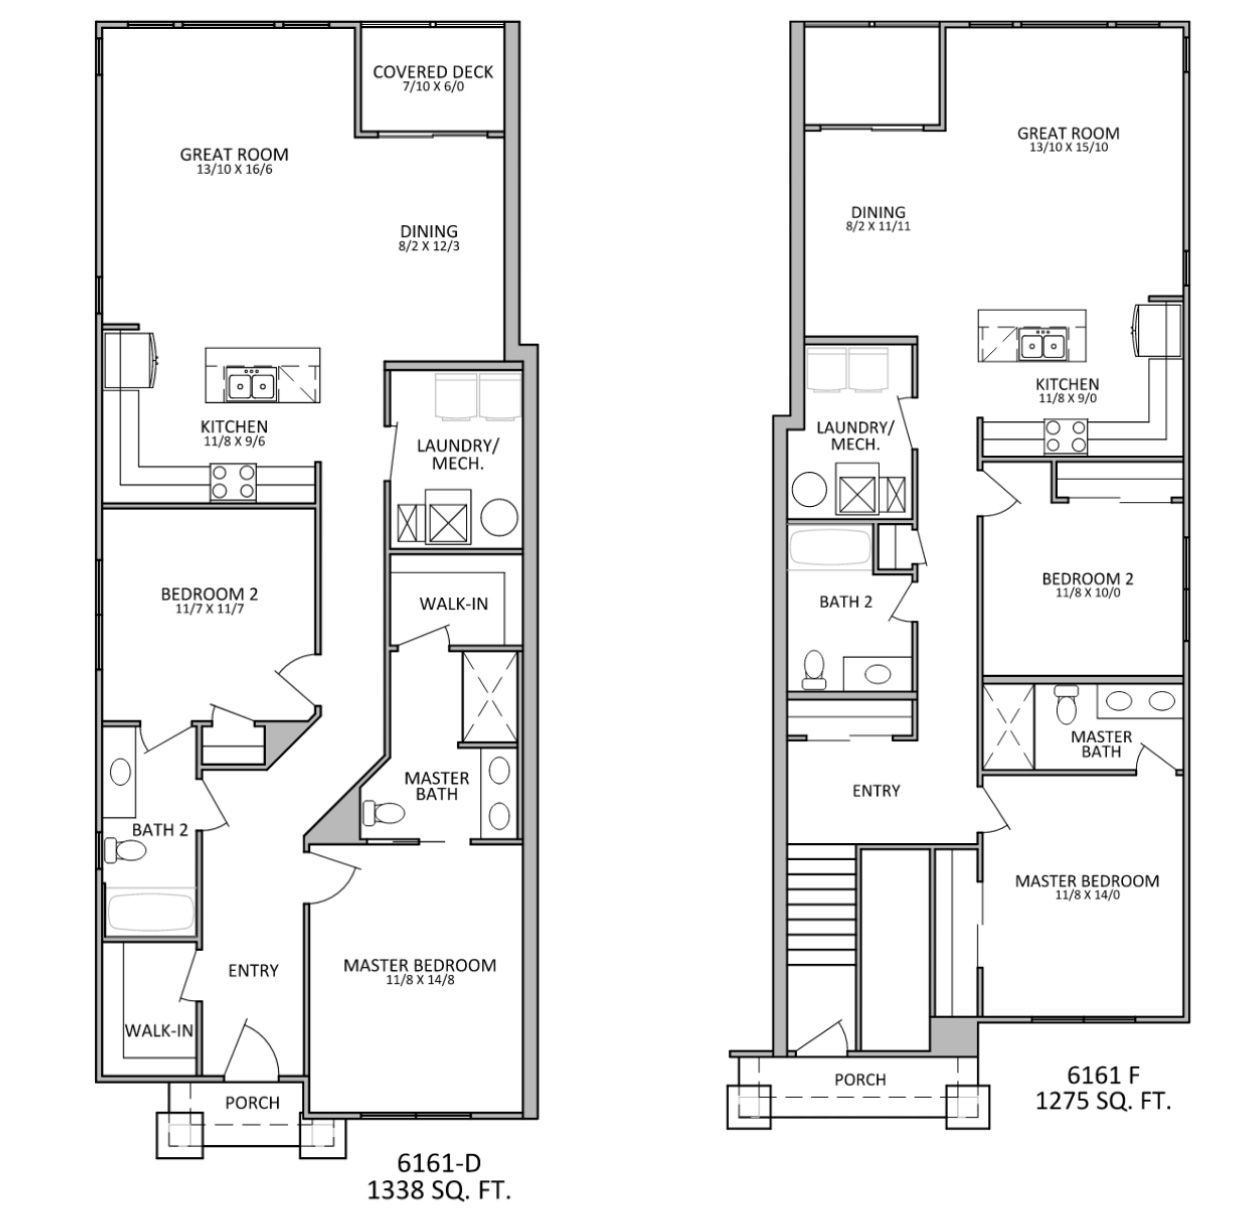 Condos at Marina Shores - Floorplan - 2 Bedroom 2nd Floor